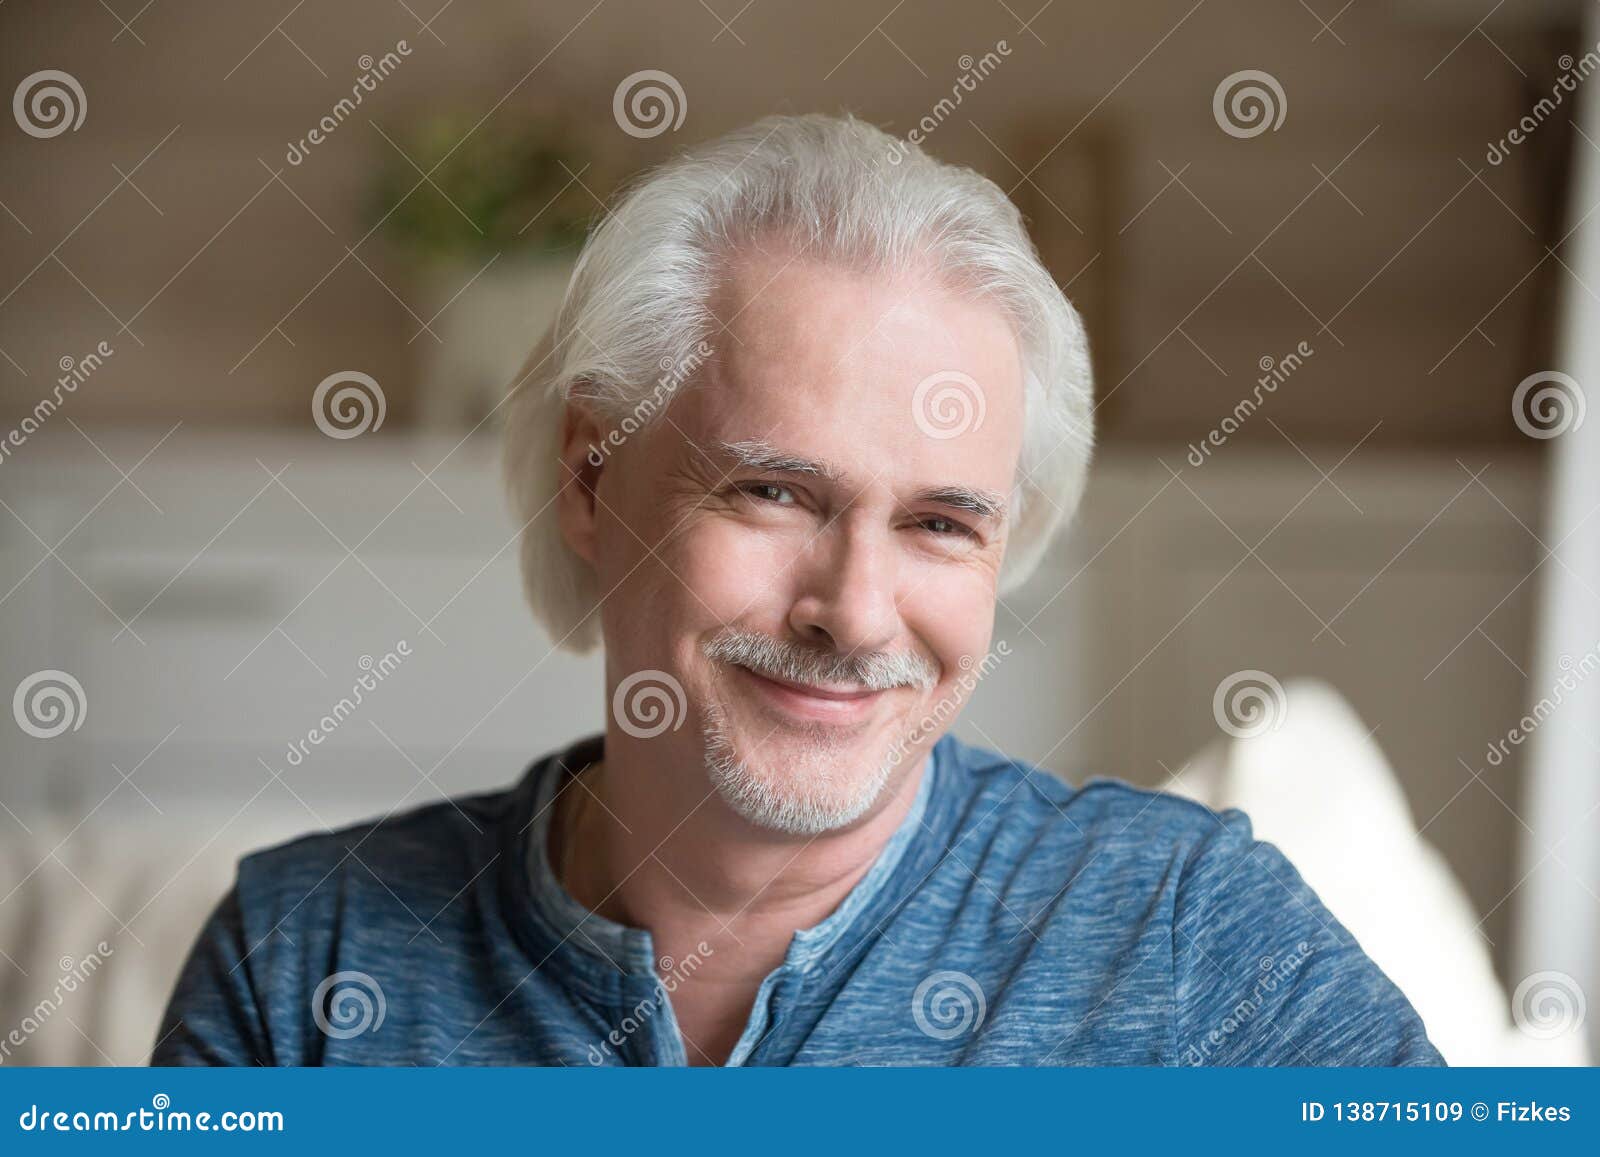 Head Shot Portrait of Confident Handsome Aged Man Stock Image - Image ...